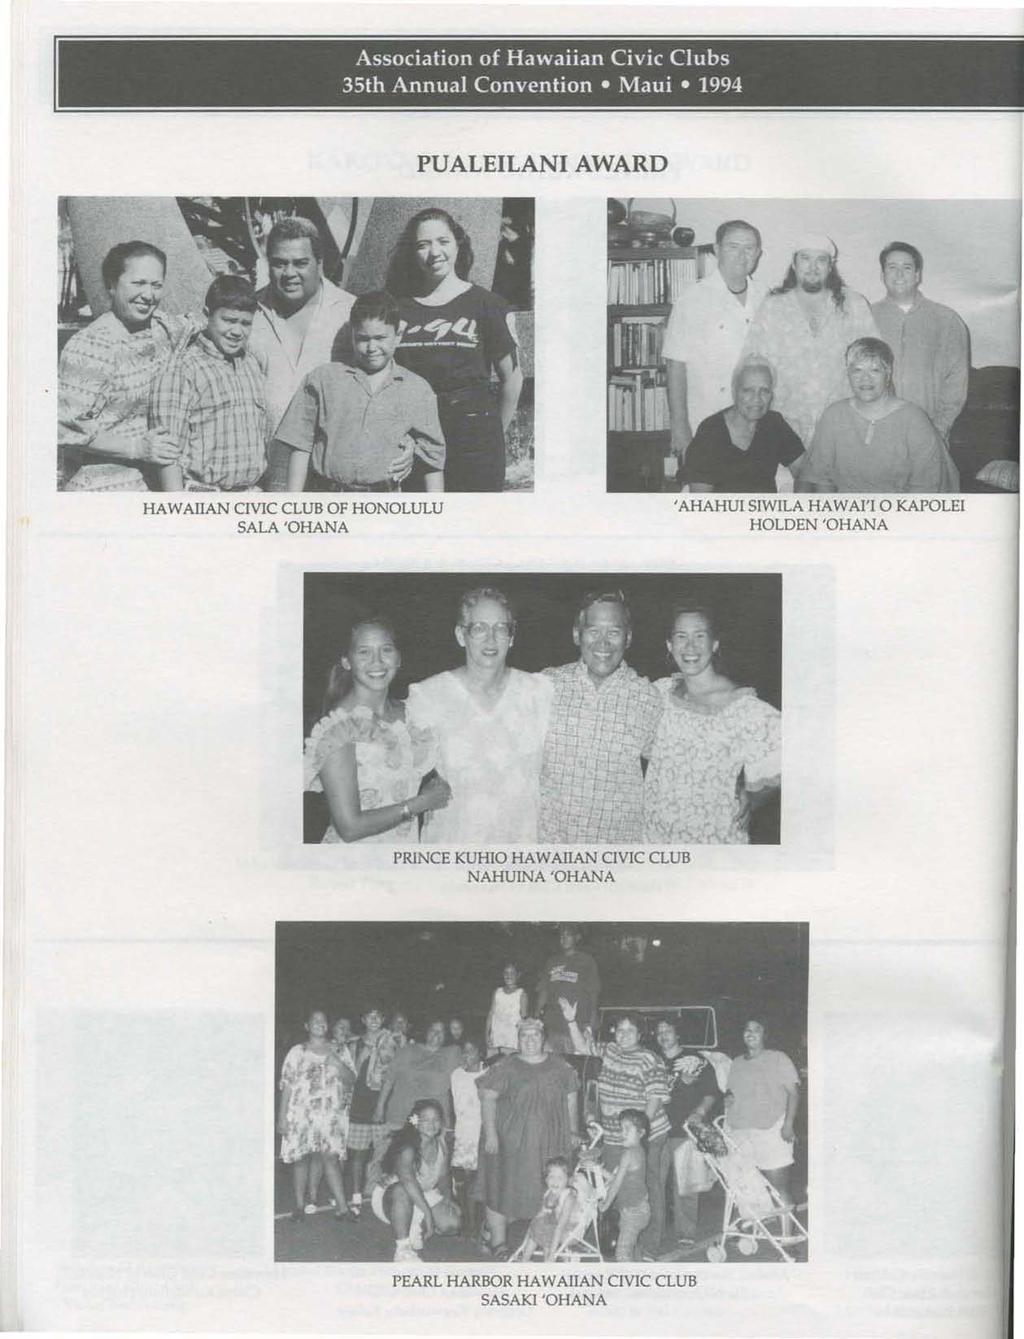 Association of Hawaiian Civic Clubs 35th Annual Convention Maui 1994 PUALEILANI AWARD HAWAIIAN CIVIC CLUB OF HONOLULU SALA